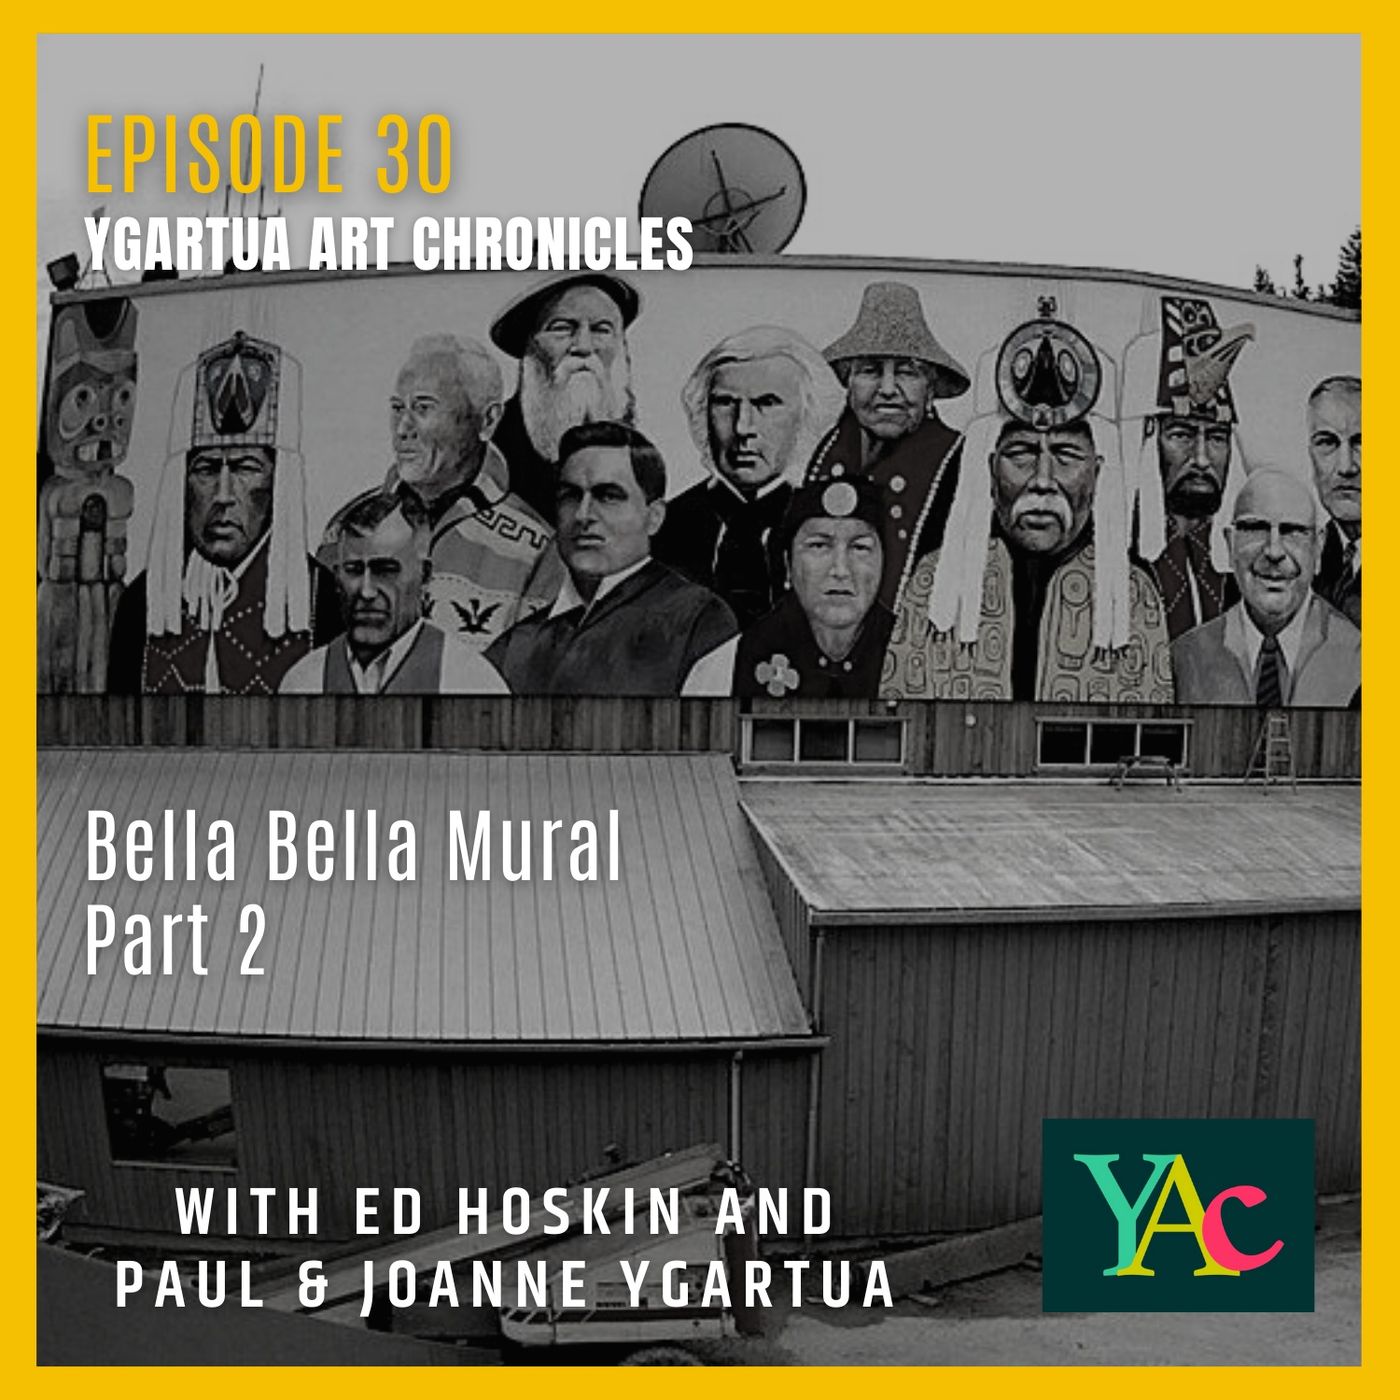 Episode 30: Bella Bella mural, part 2